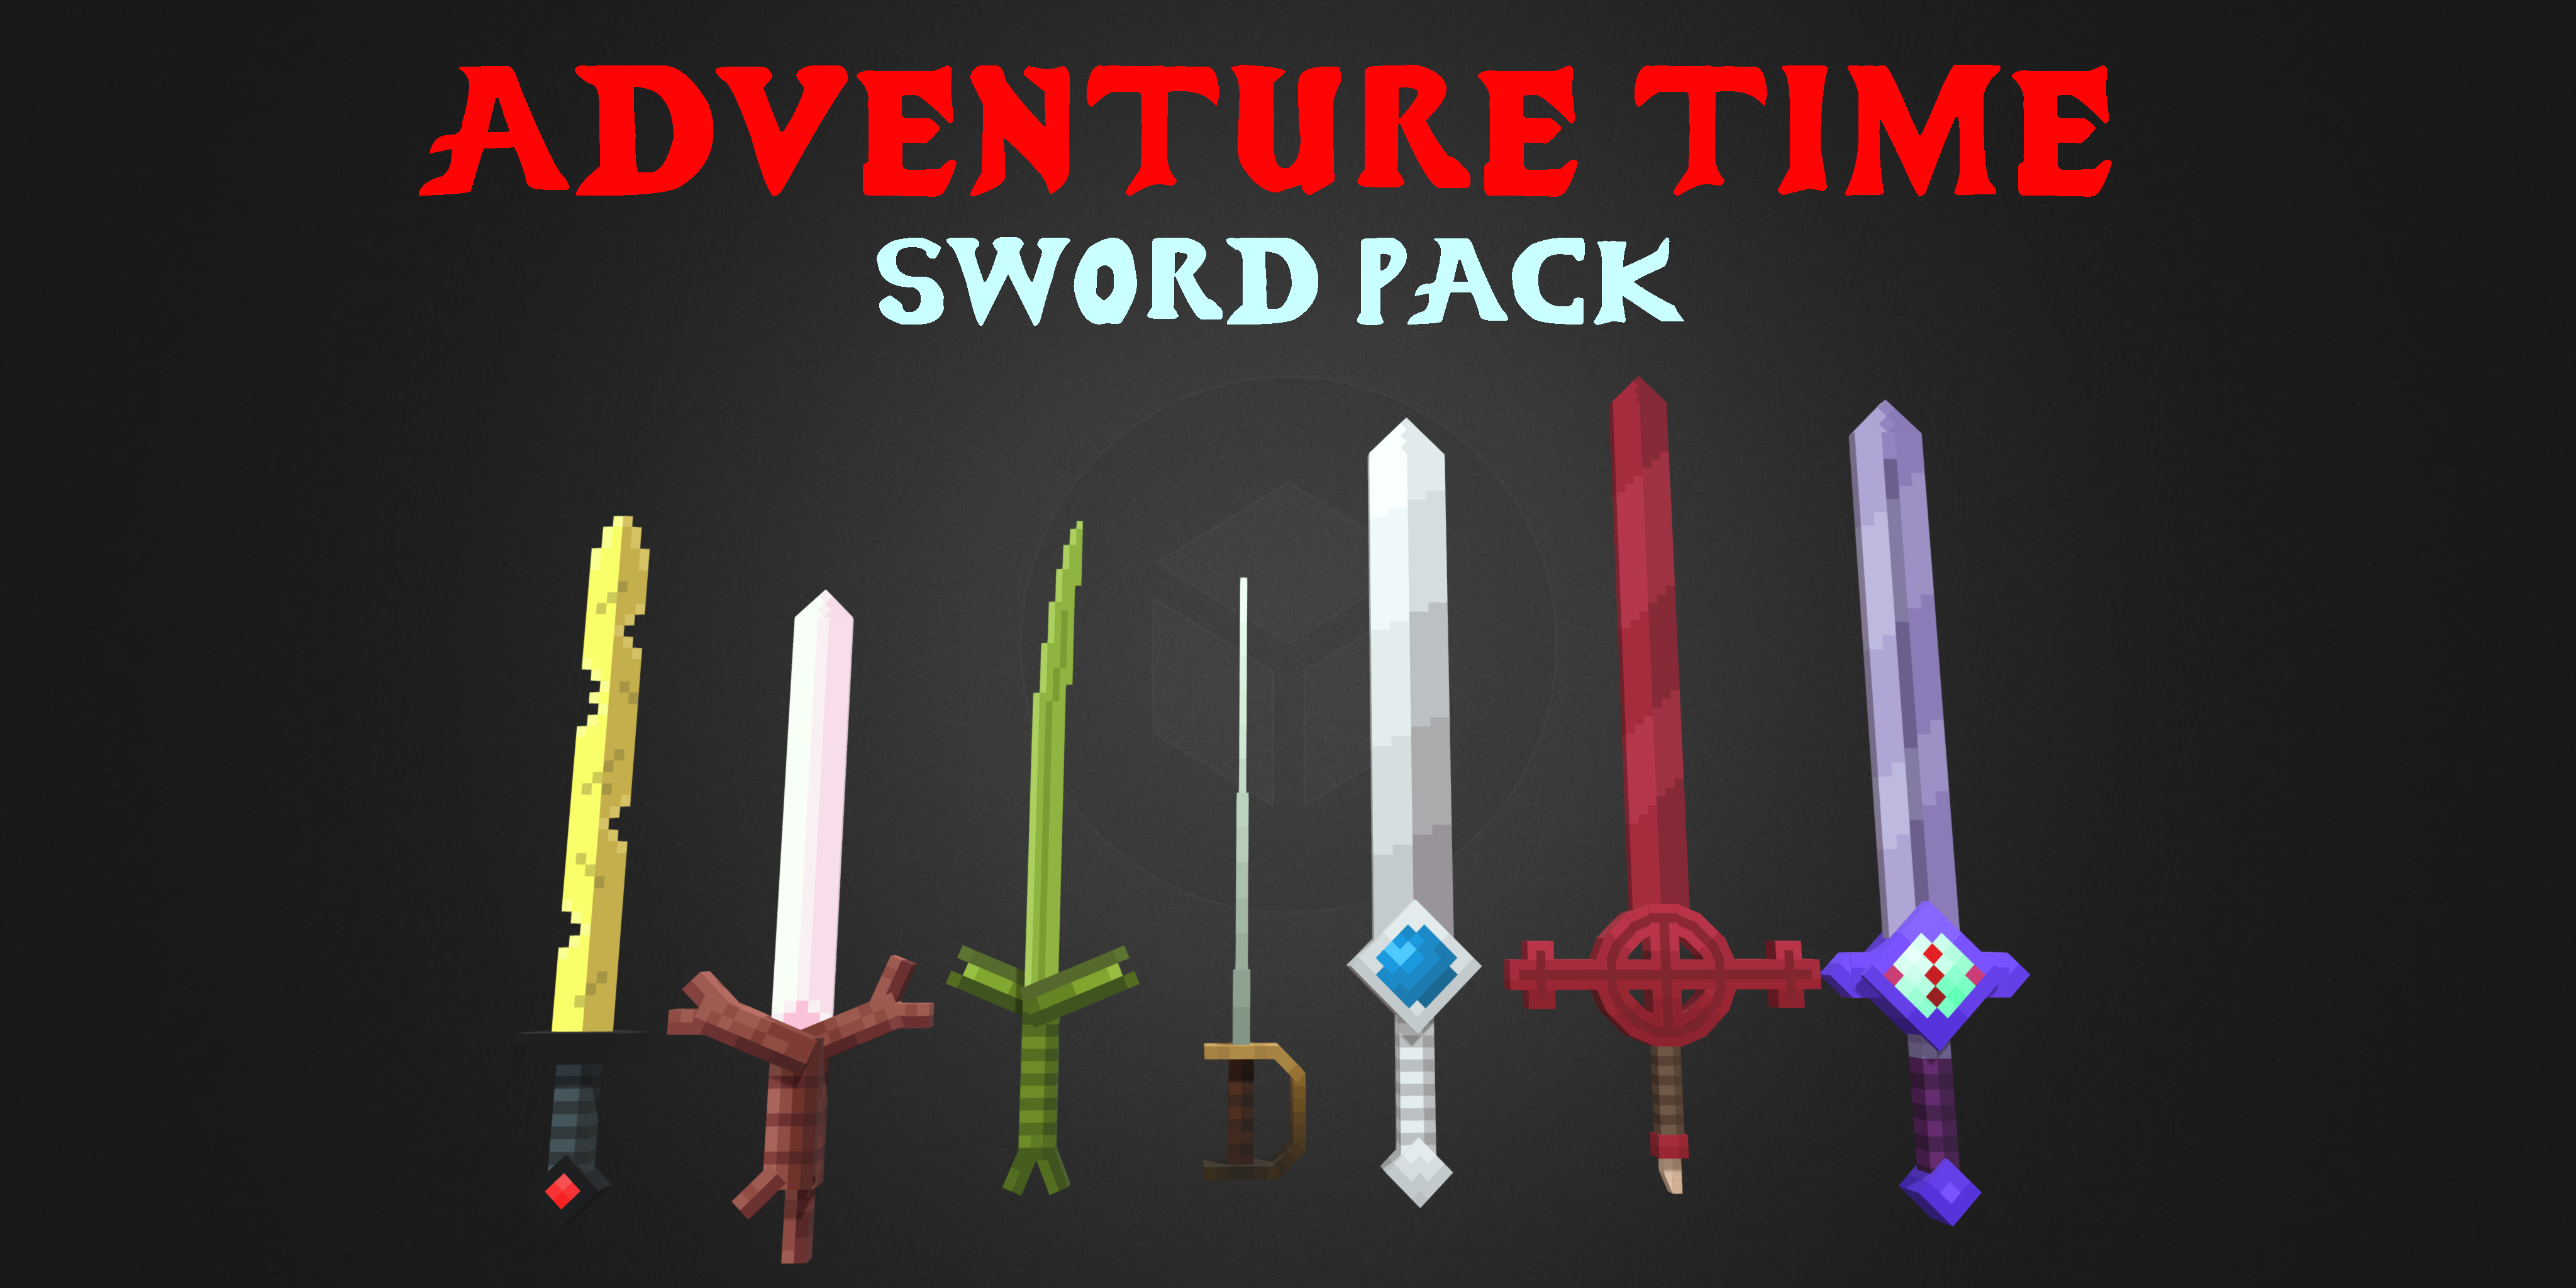 I made Finn's swords in the Minecraft style! : r/adventuretime